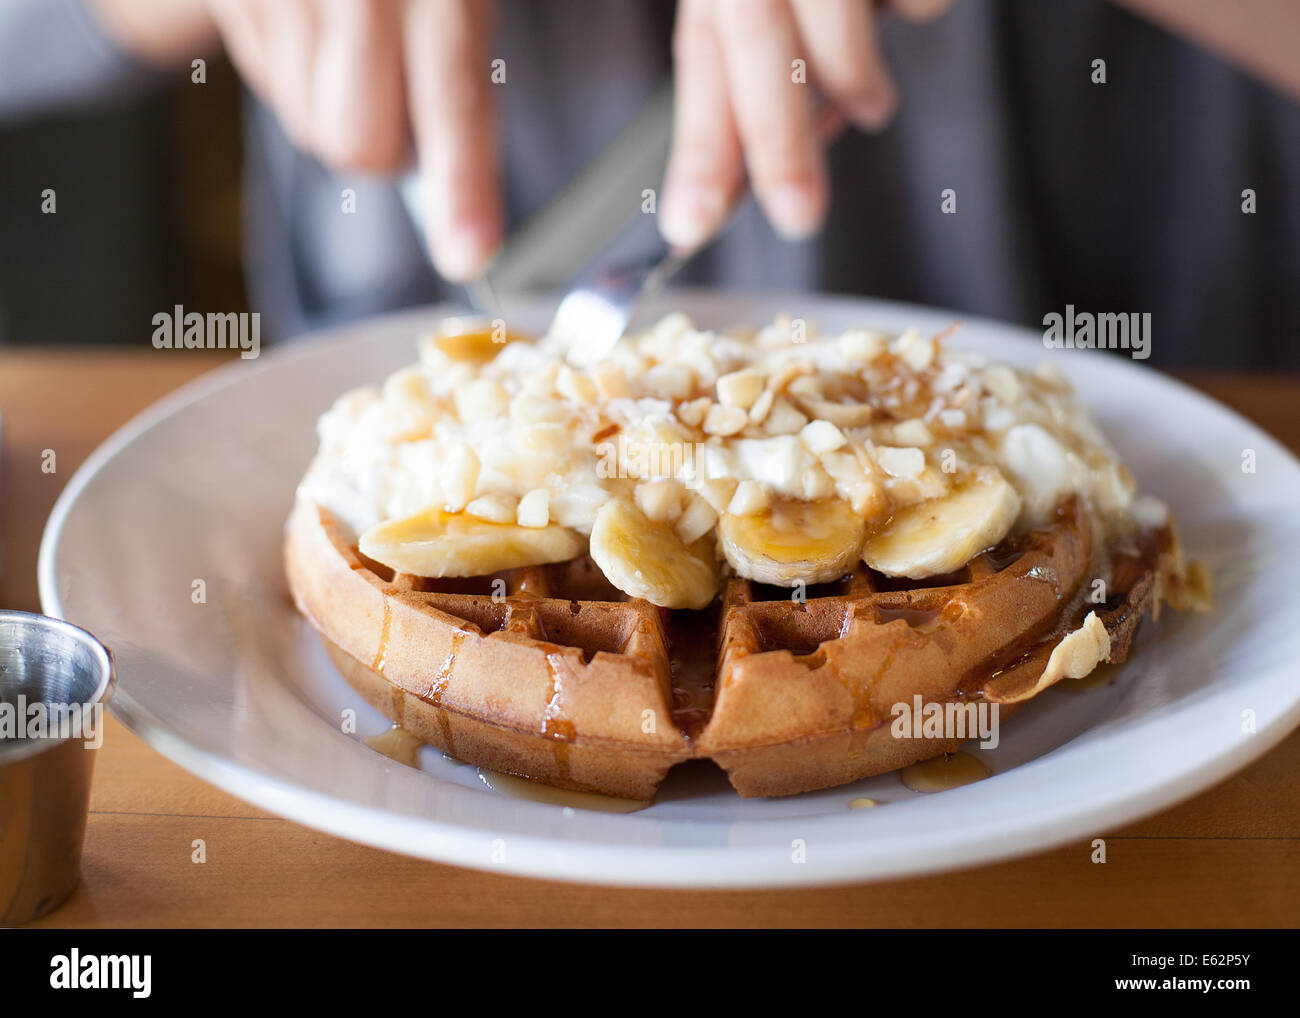 woman cutting up a banana macadamia nut waffle Stock Photo